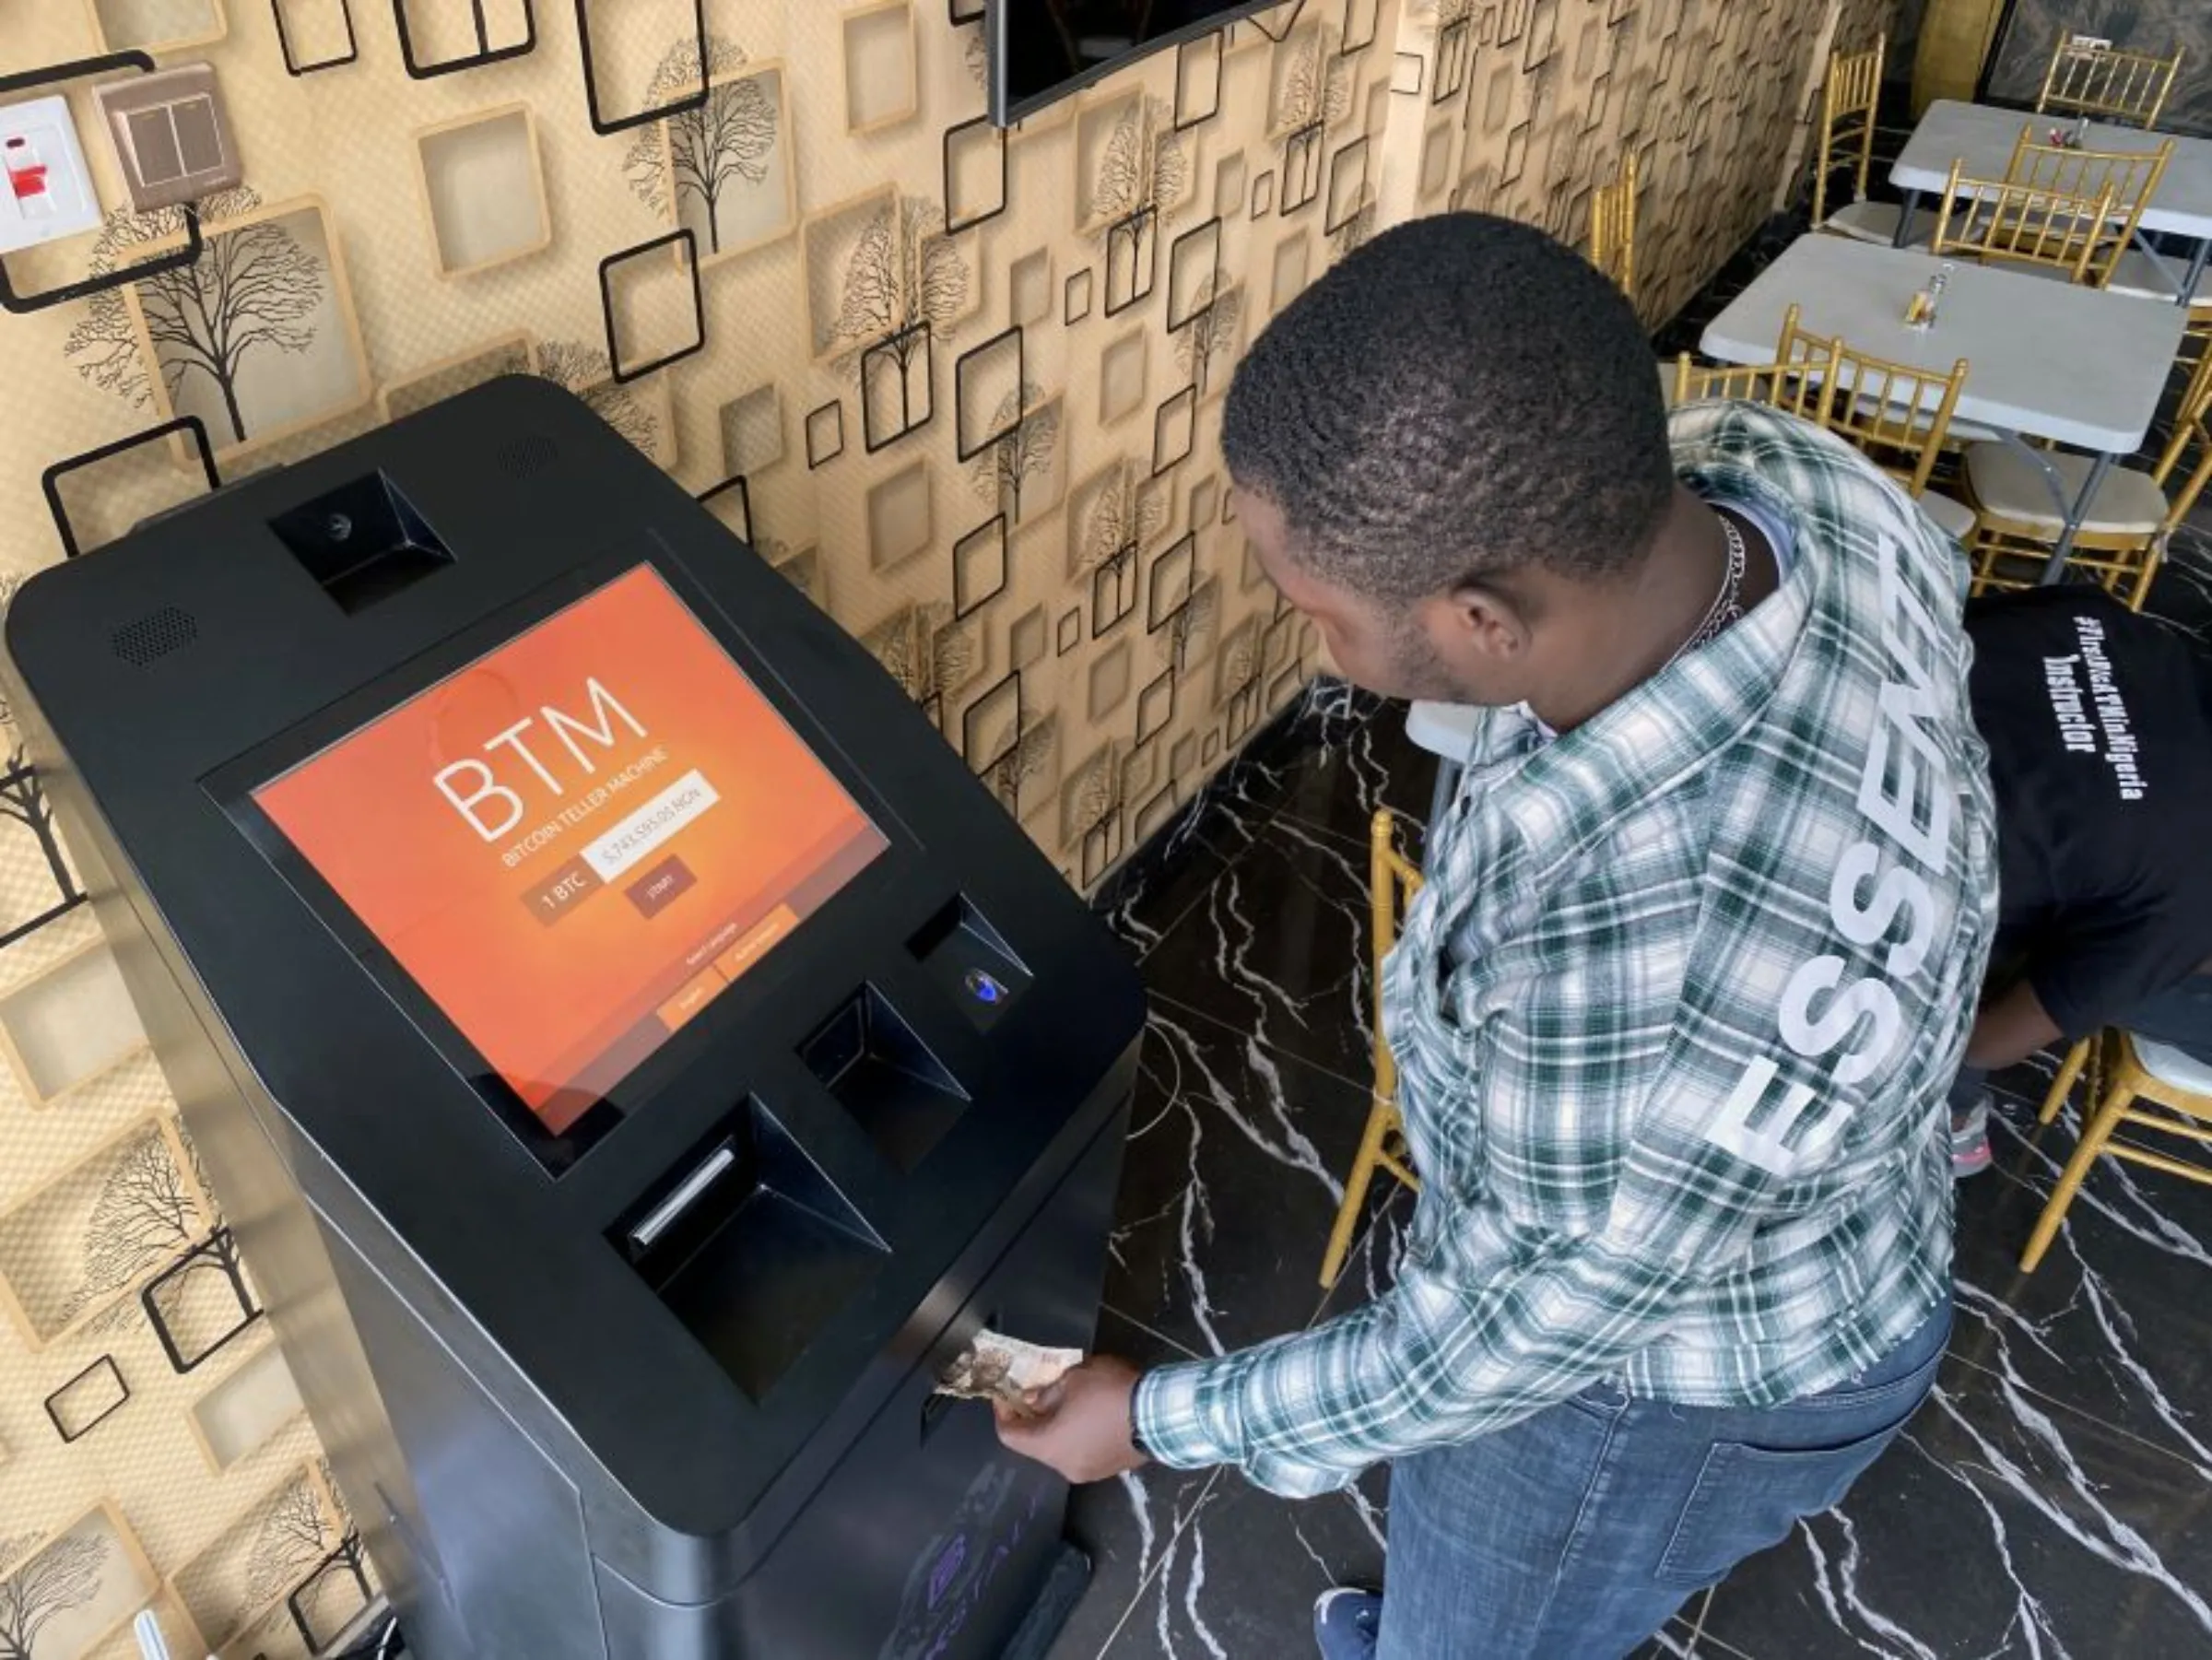 A bitcoin user buys bitcoins with naira on Bitcoin Teller Machine in Lagos, Nigeria September 1, 2020